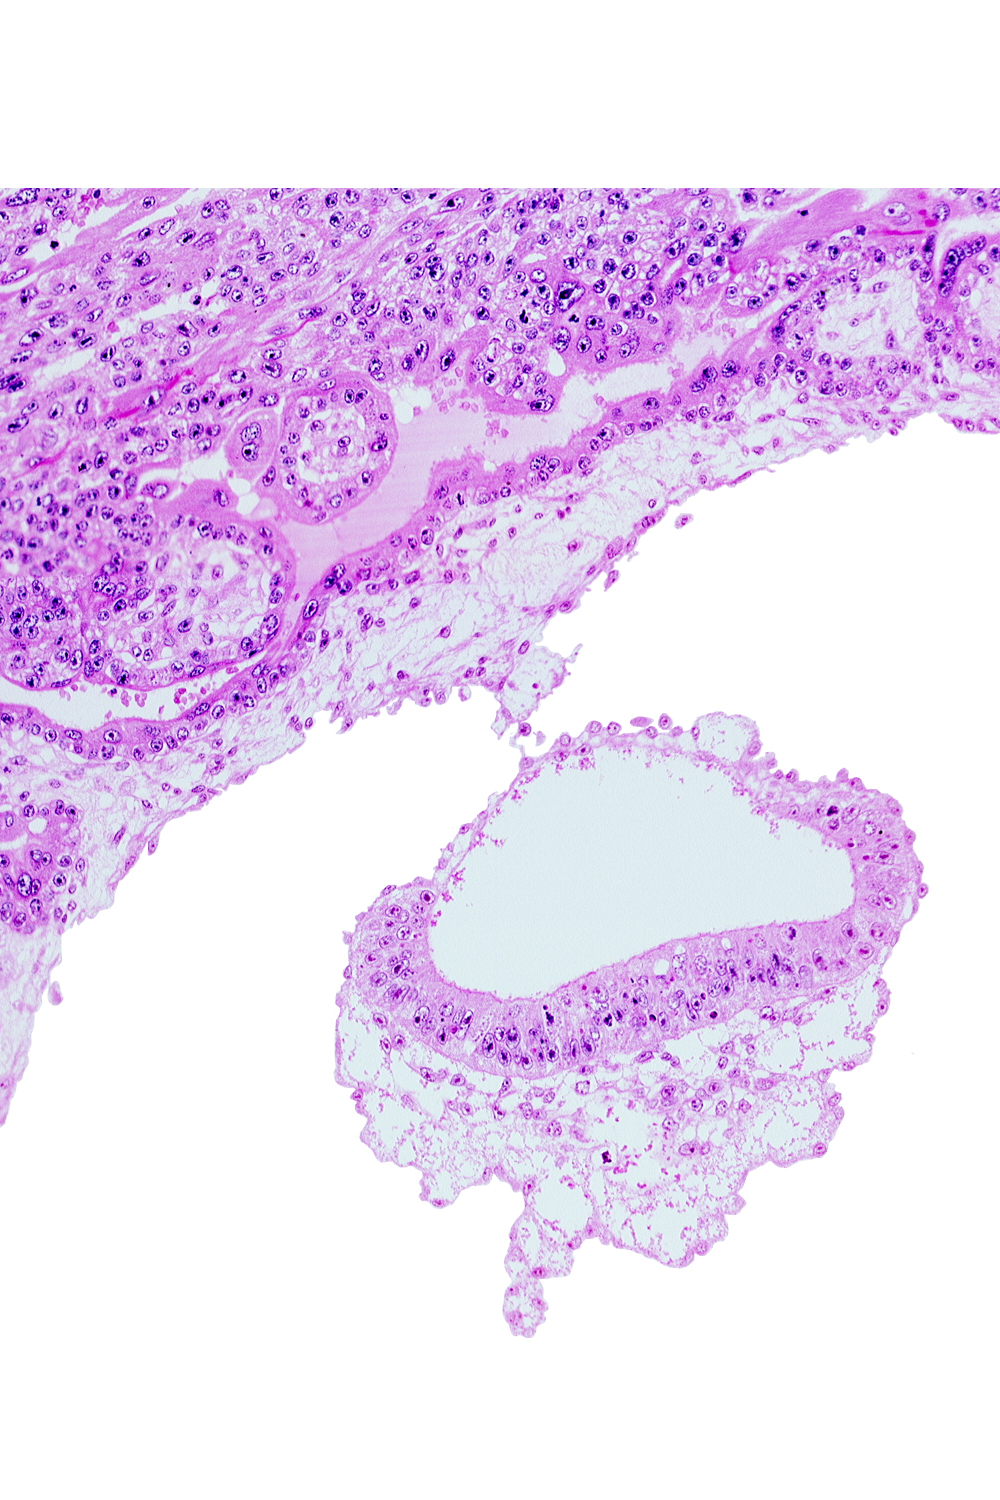 amnion, amniotic cavity, embryonic disc, extra-embryonic mesoblast (somatopleuric layer)